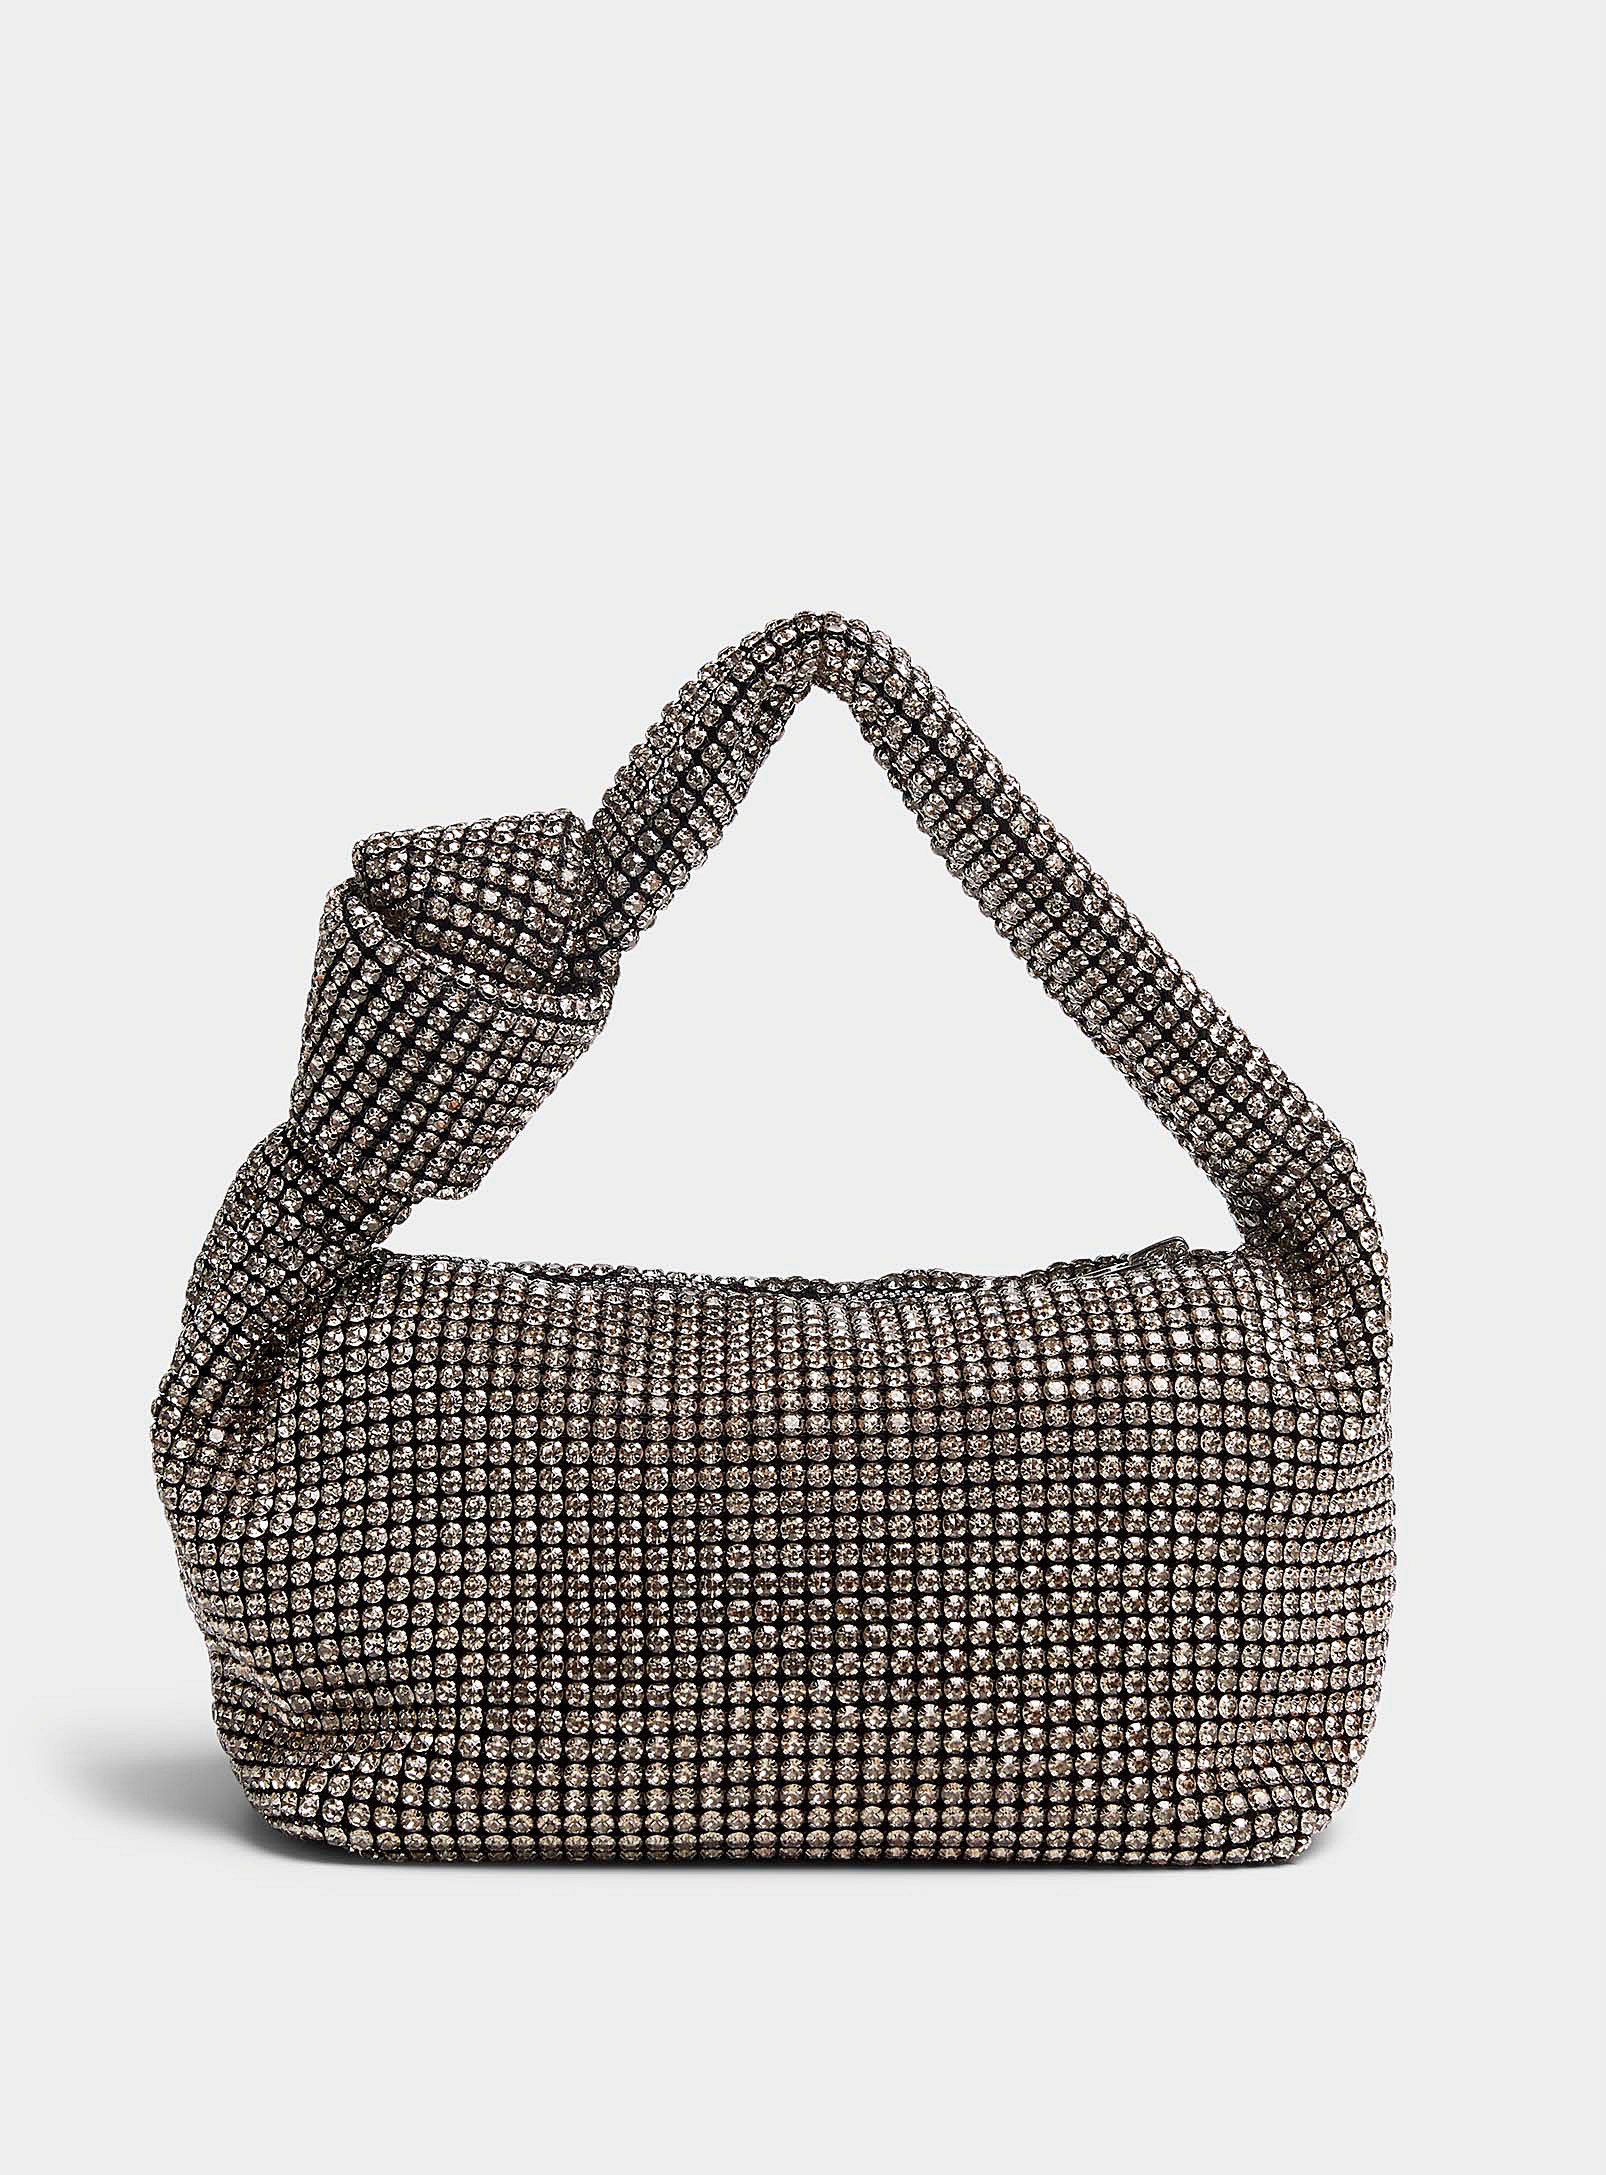 Simons - Women's Knotted-handle rhinestone evening bag